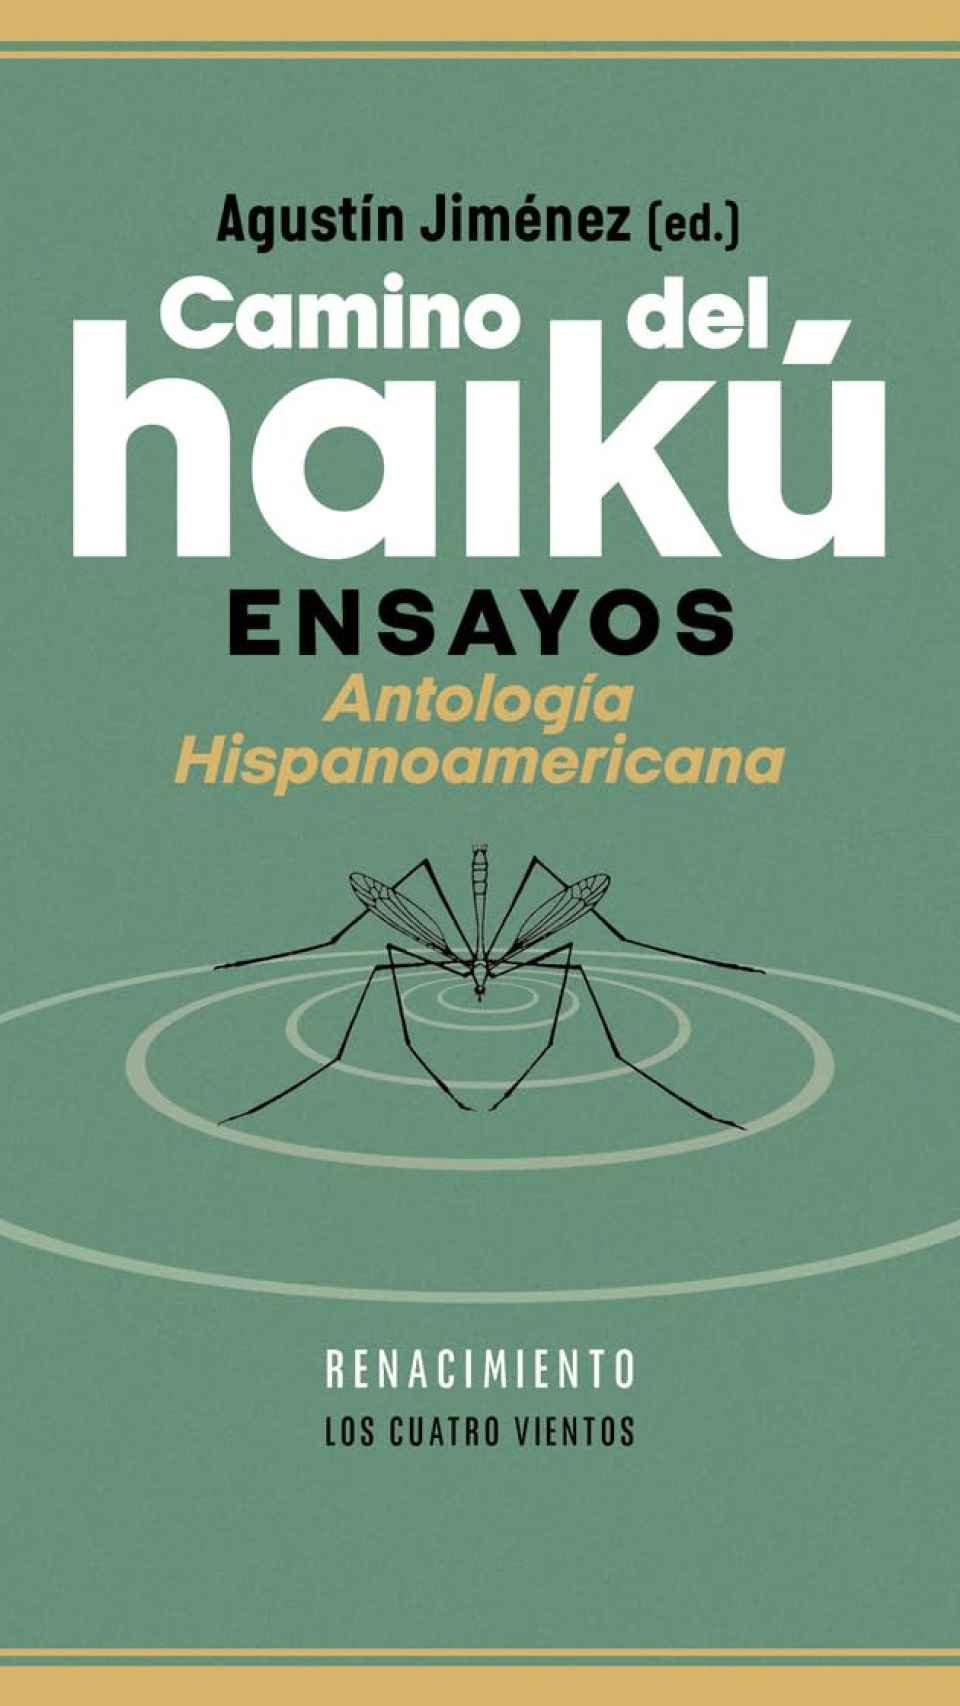 'Camino del haikú', libro de Agustín Jiménez